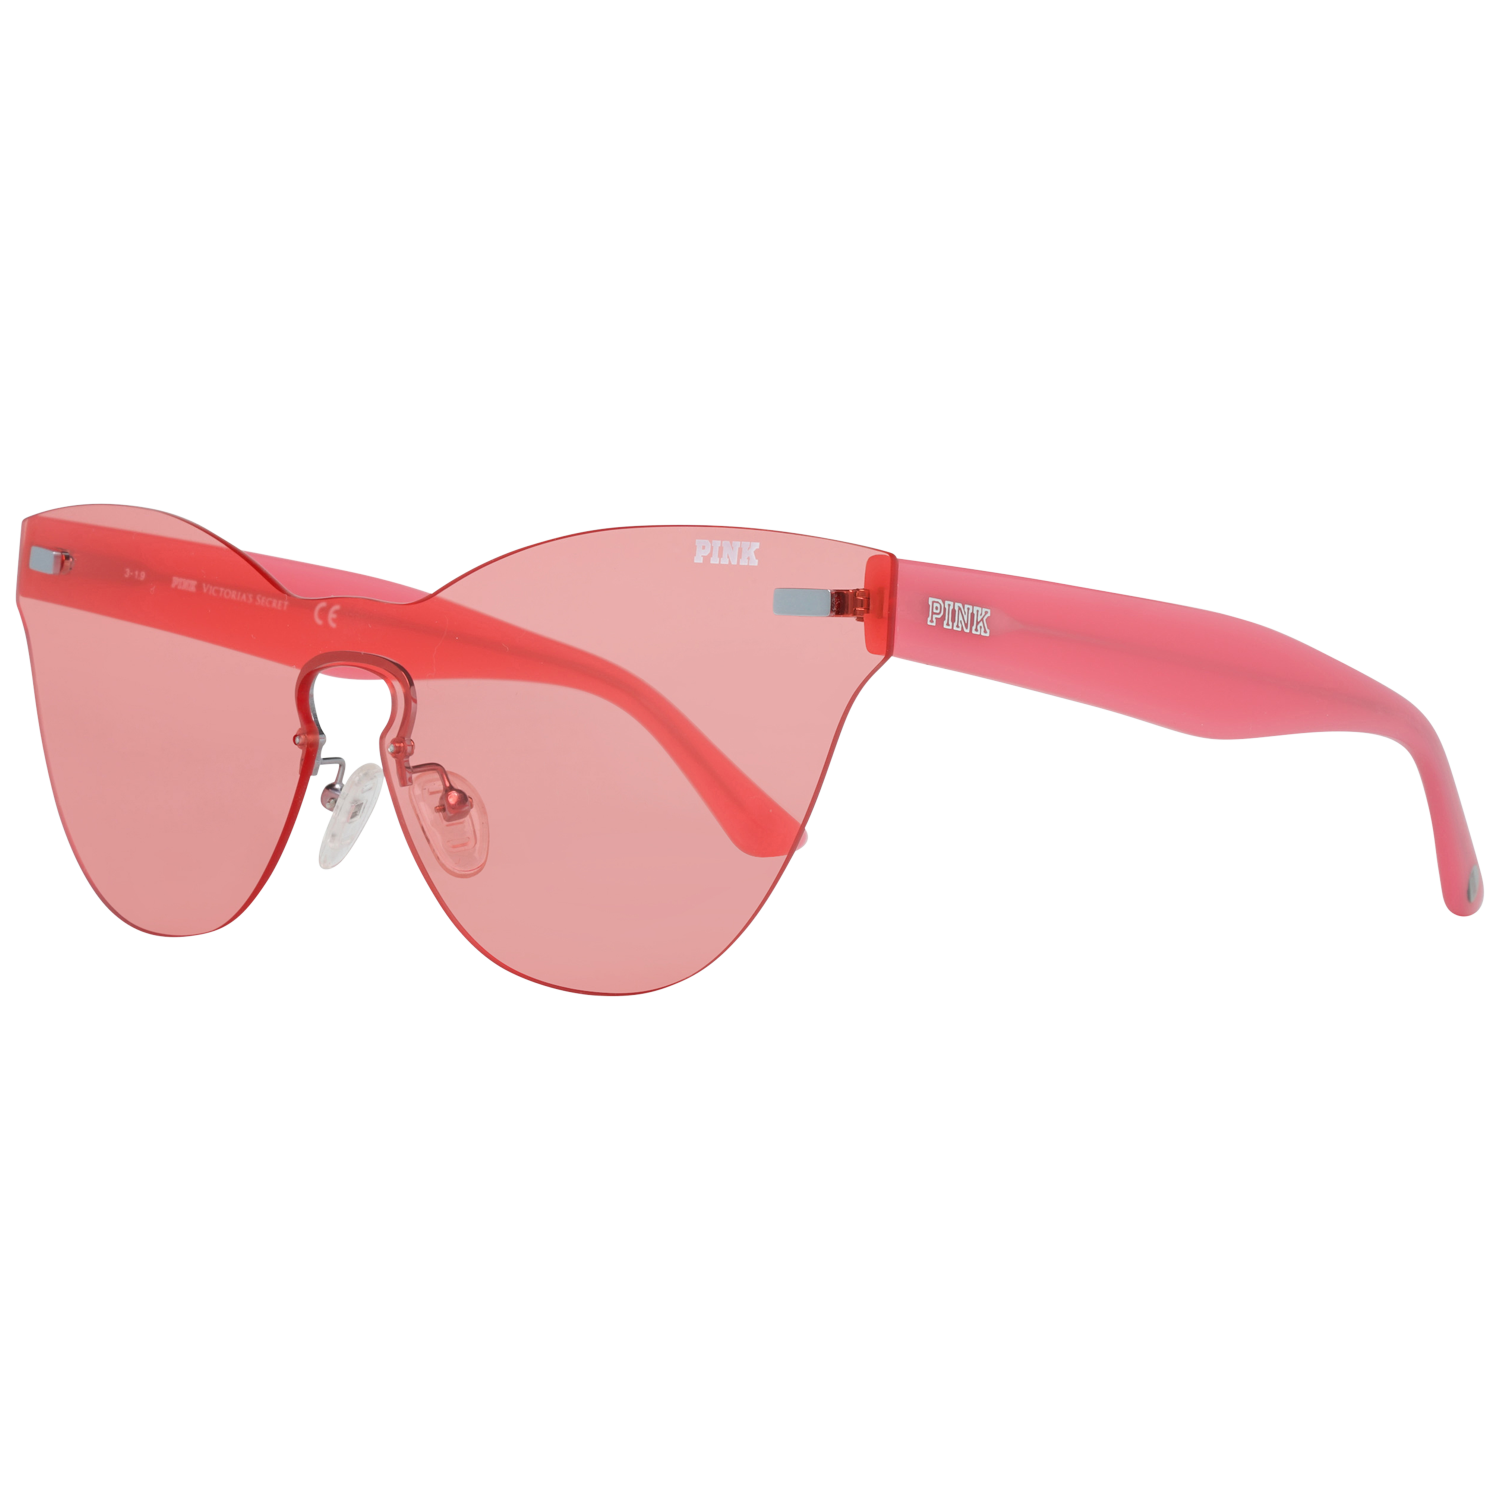 Victoria's Secret Pink Sunglasses PK0011 66S 147 Coral